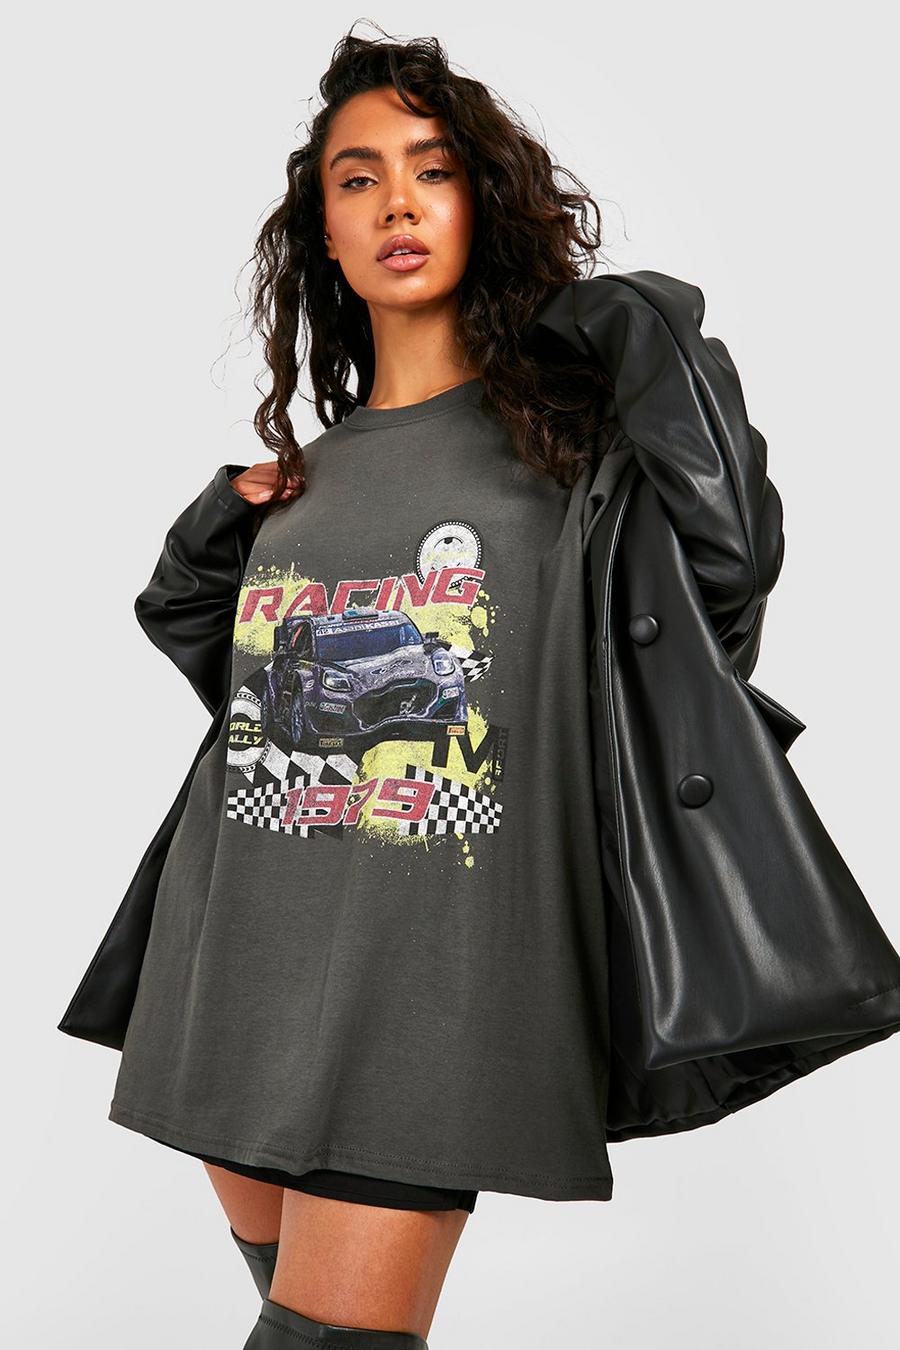 Charcoal grey M-sport Racing License Oversized Printed Slogan T-shirt 